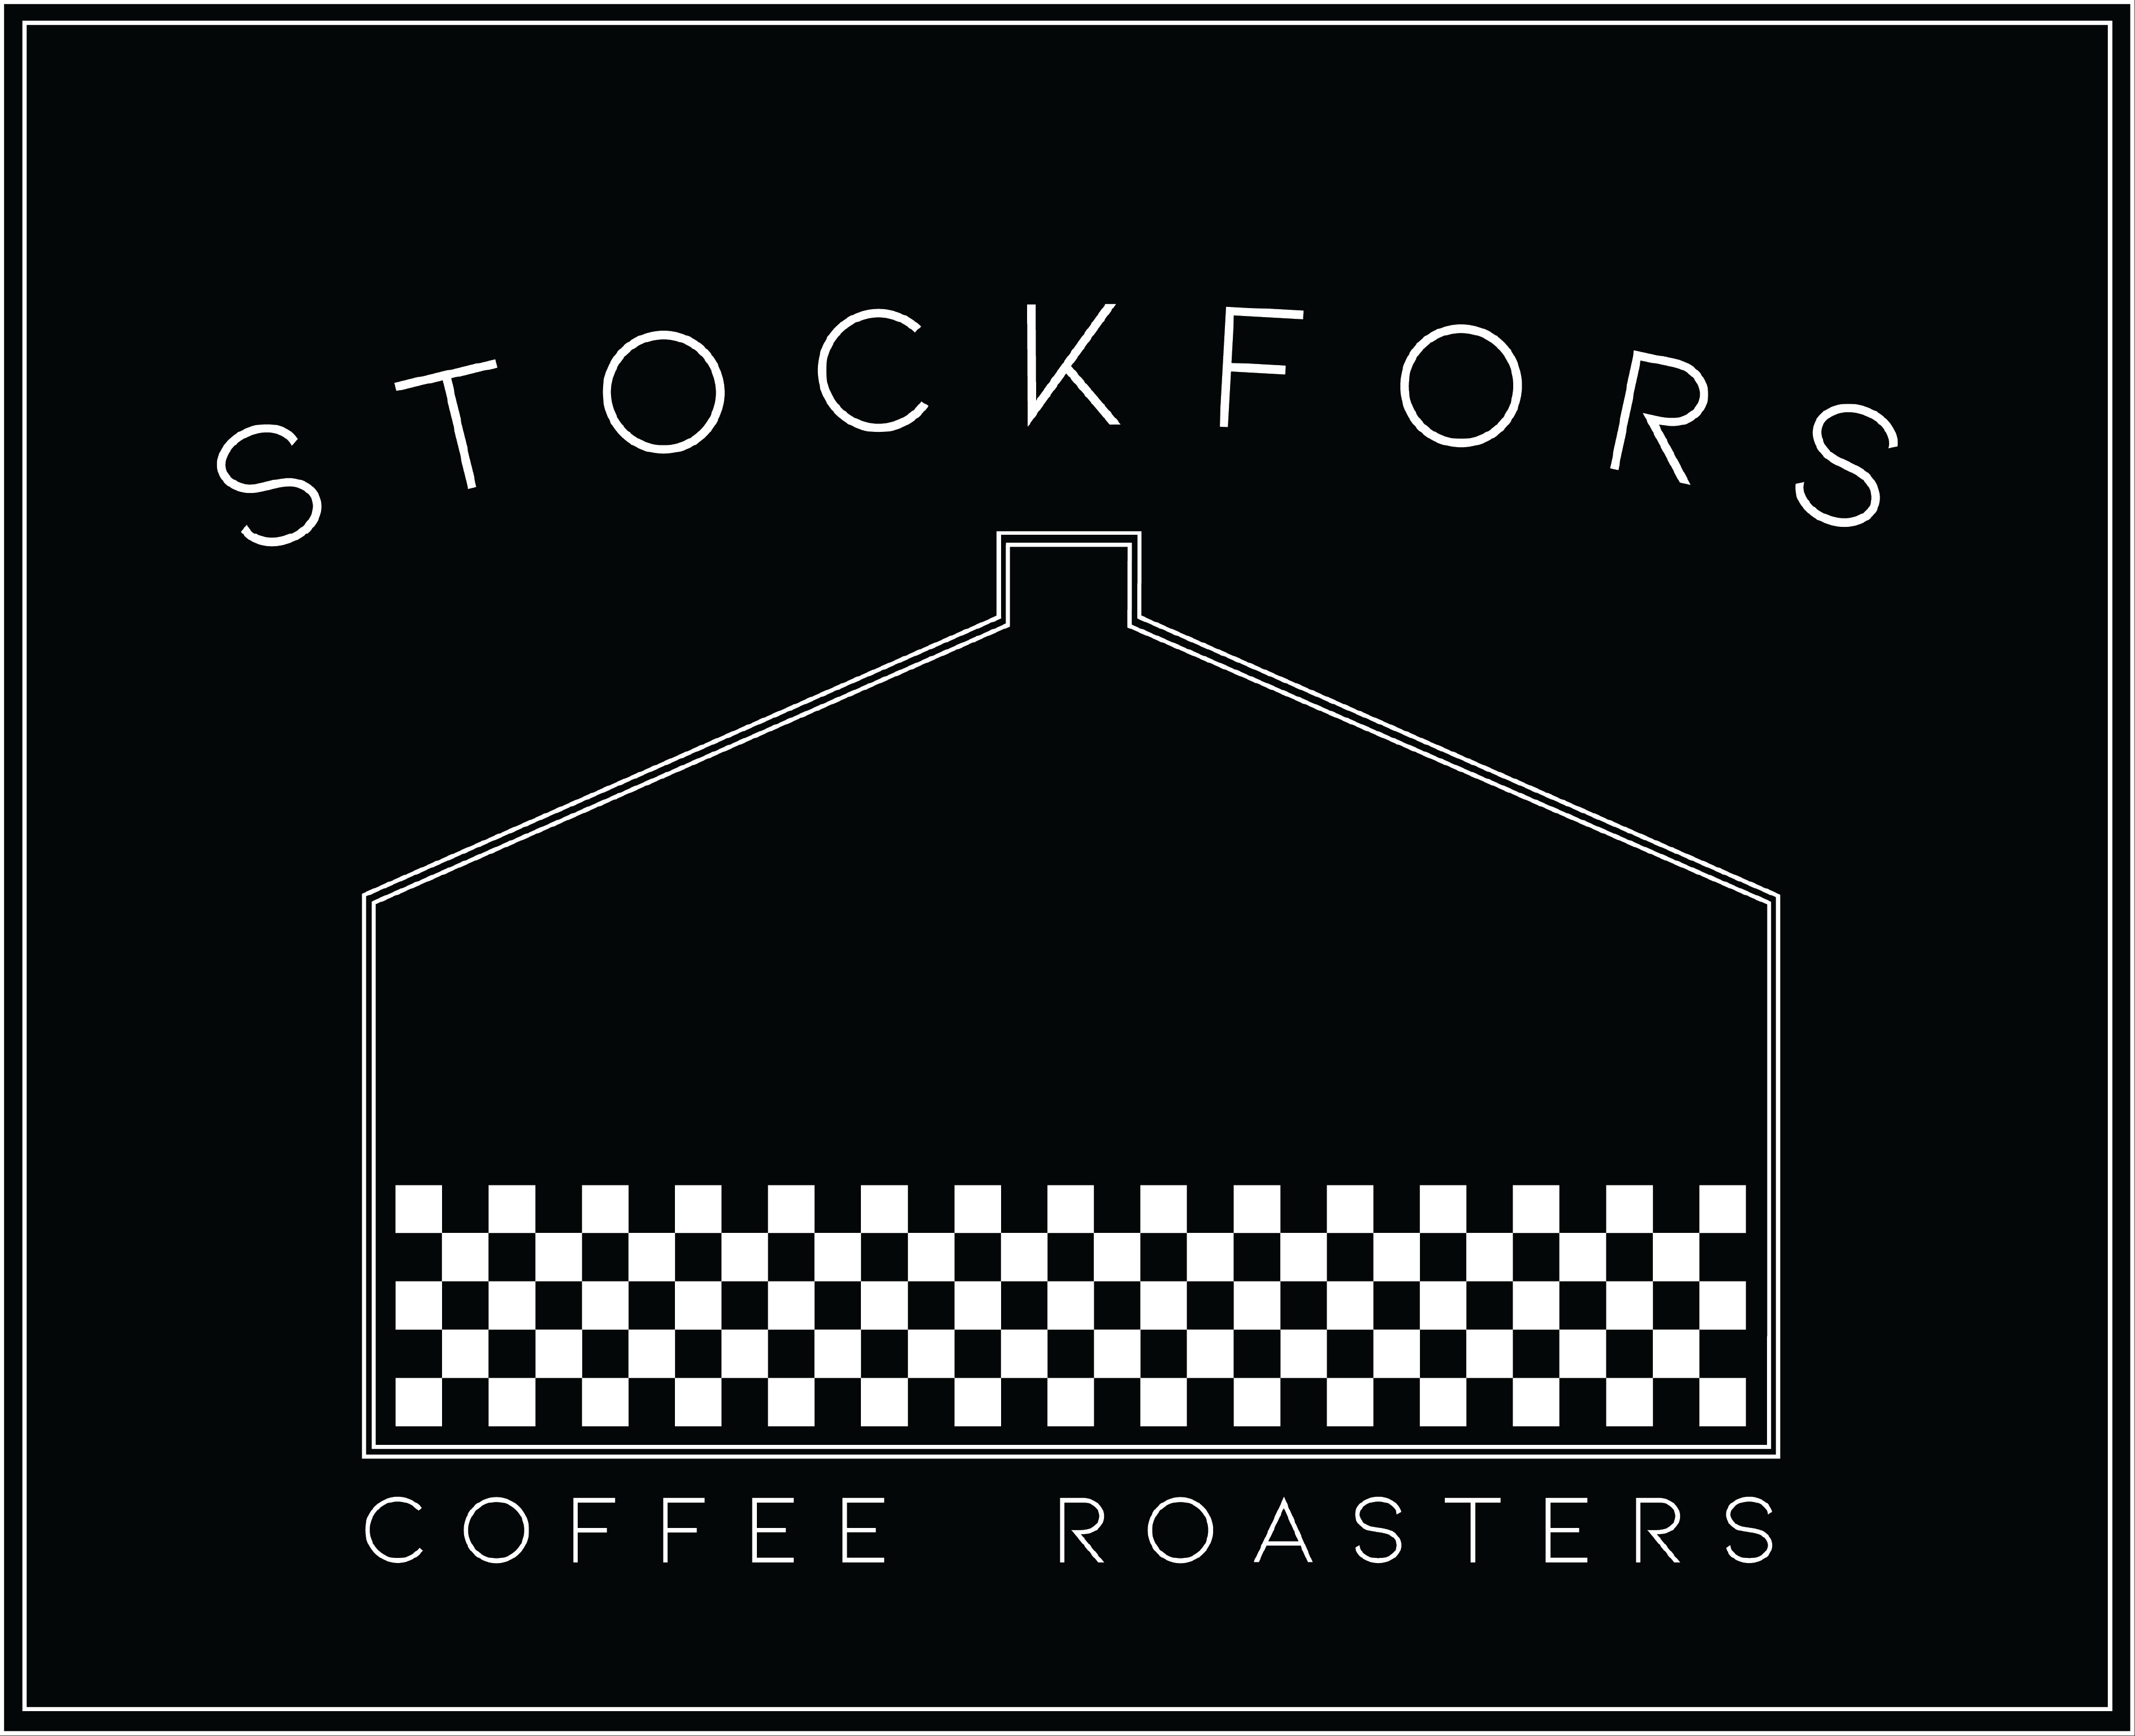 Stockfors Coffee Roasters